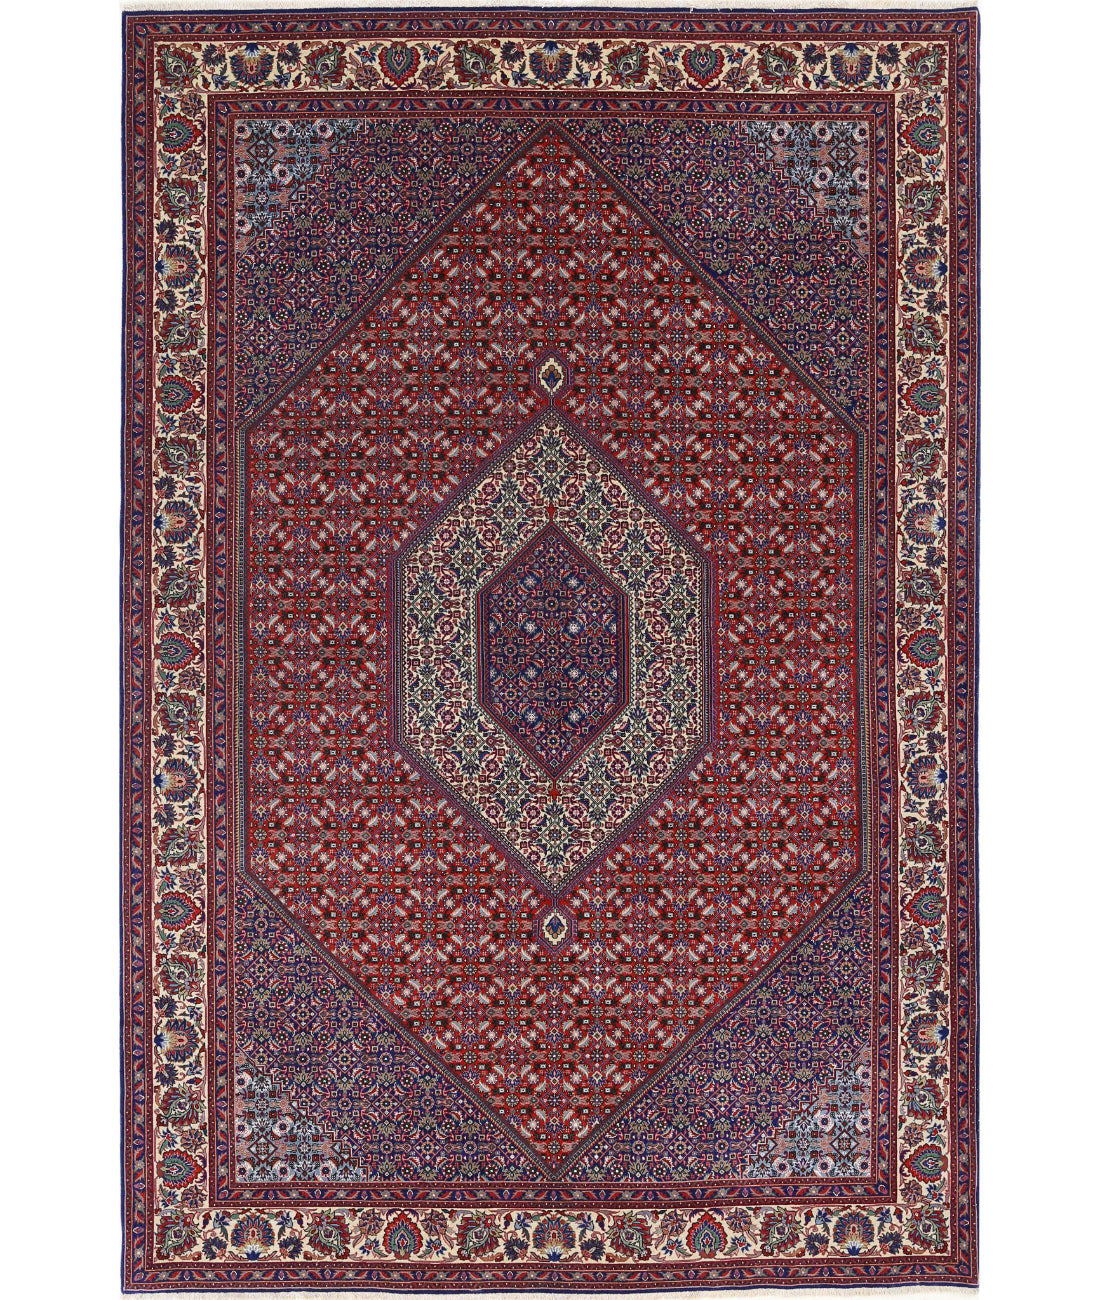 Hand Knotted Persian Bijar Wool Rug - 6'8'' x 9'11'' 6'8'' x 9'11'' (200 X 298) / Red / Ivory